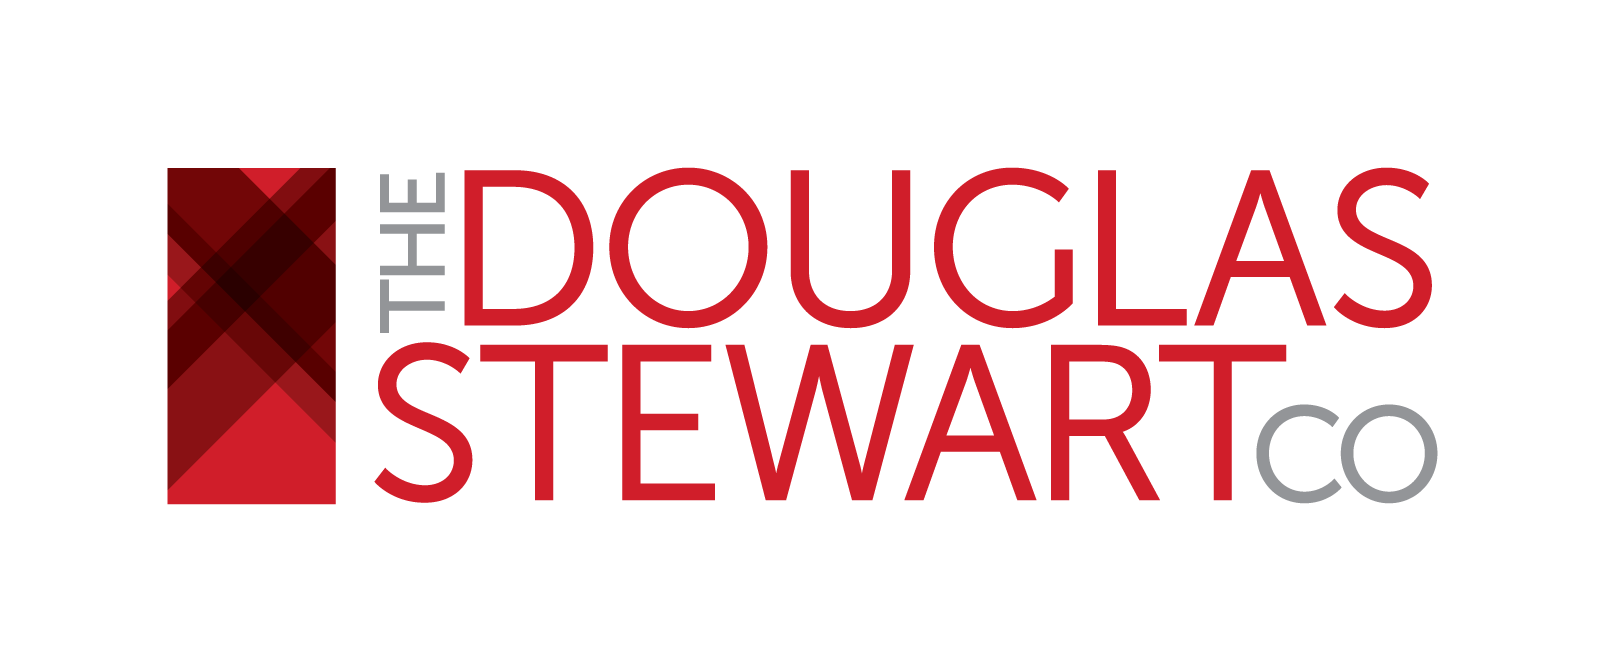 The Douglas Stewart Company Logo